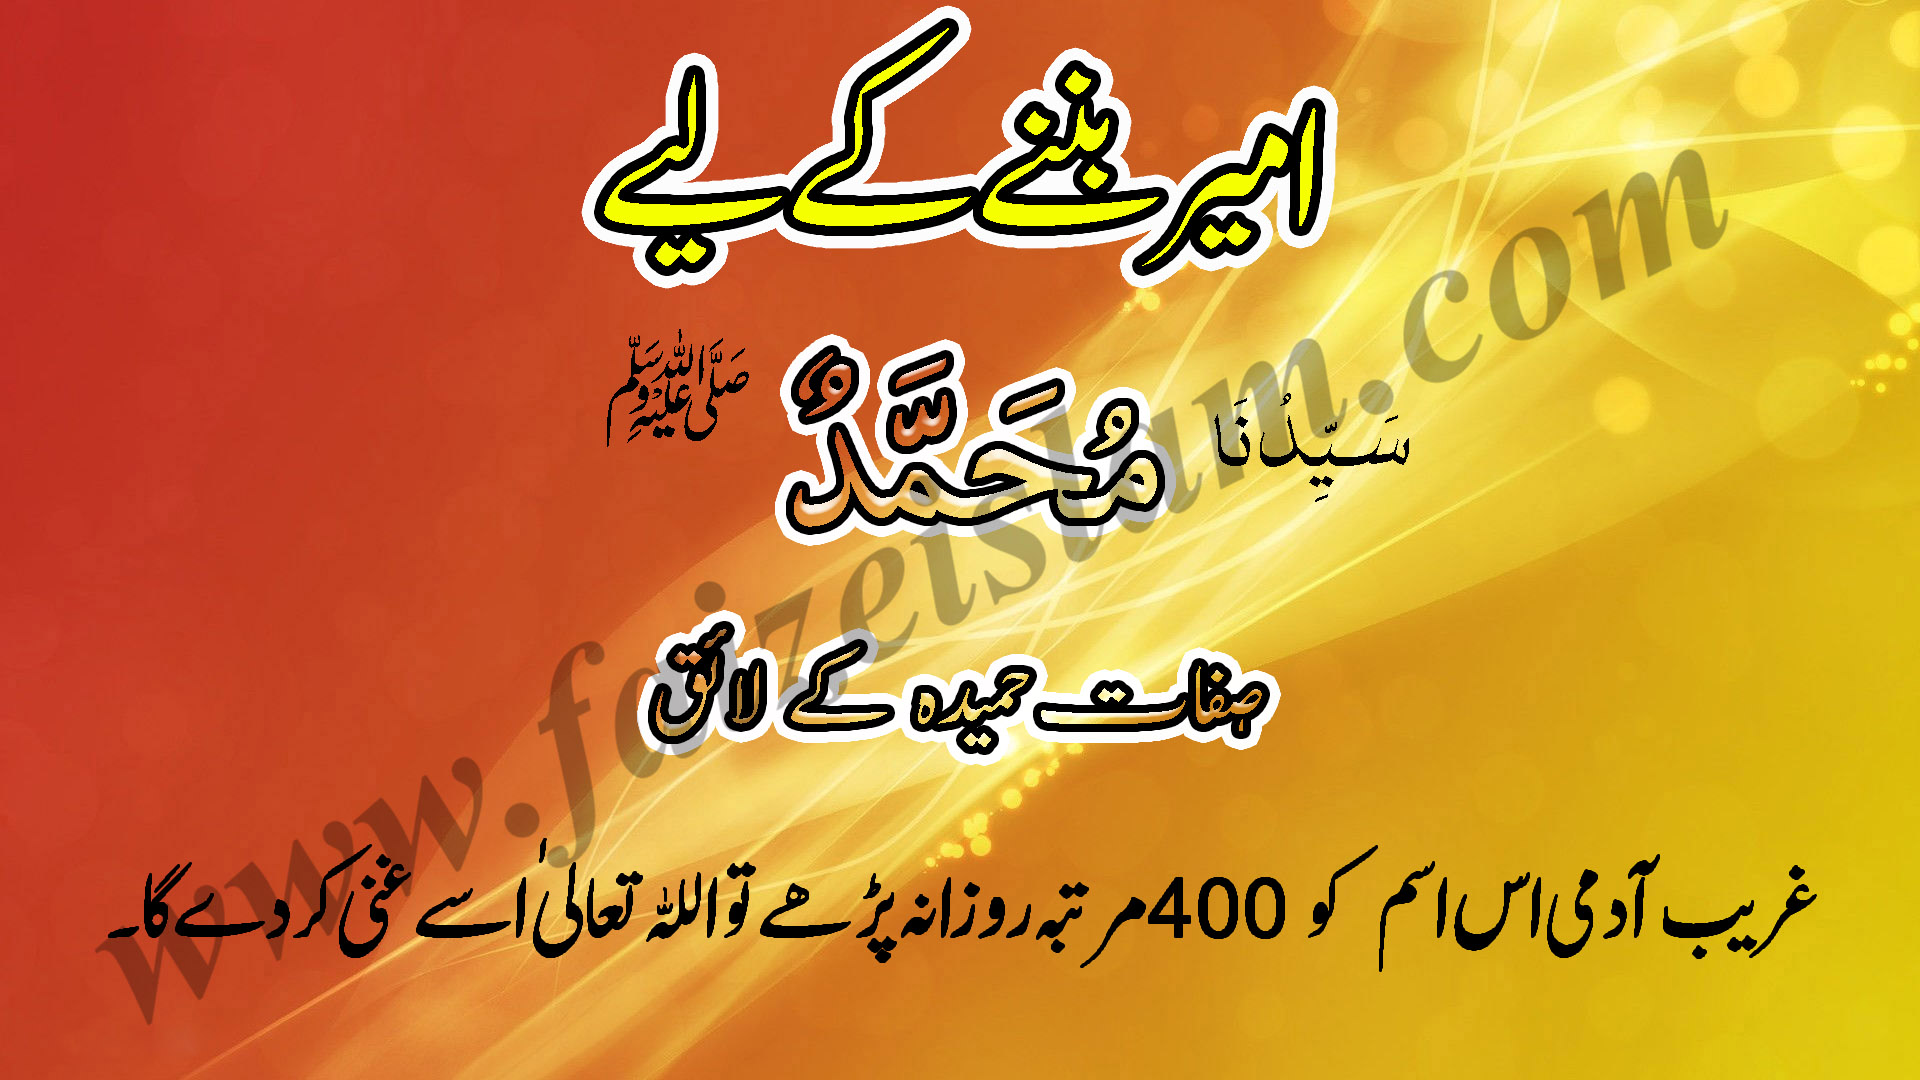 Wazifa for Money - Ameer Bannay Kay Liye Wazifa In Urdu